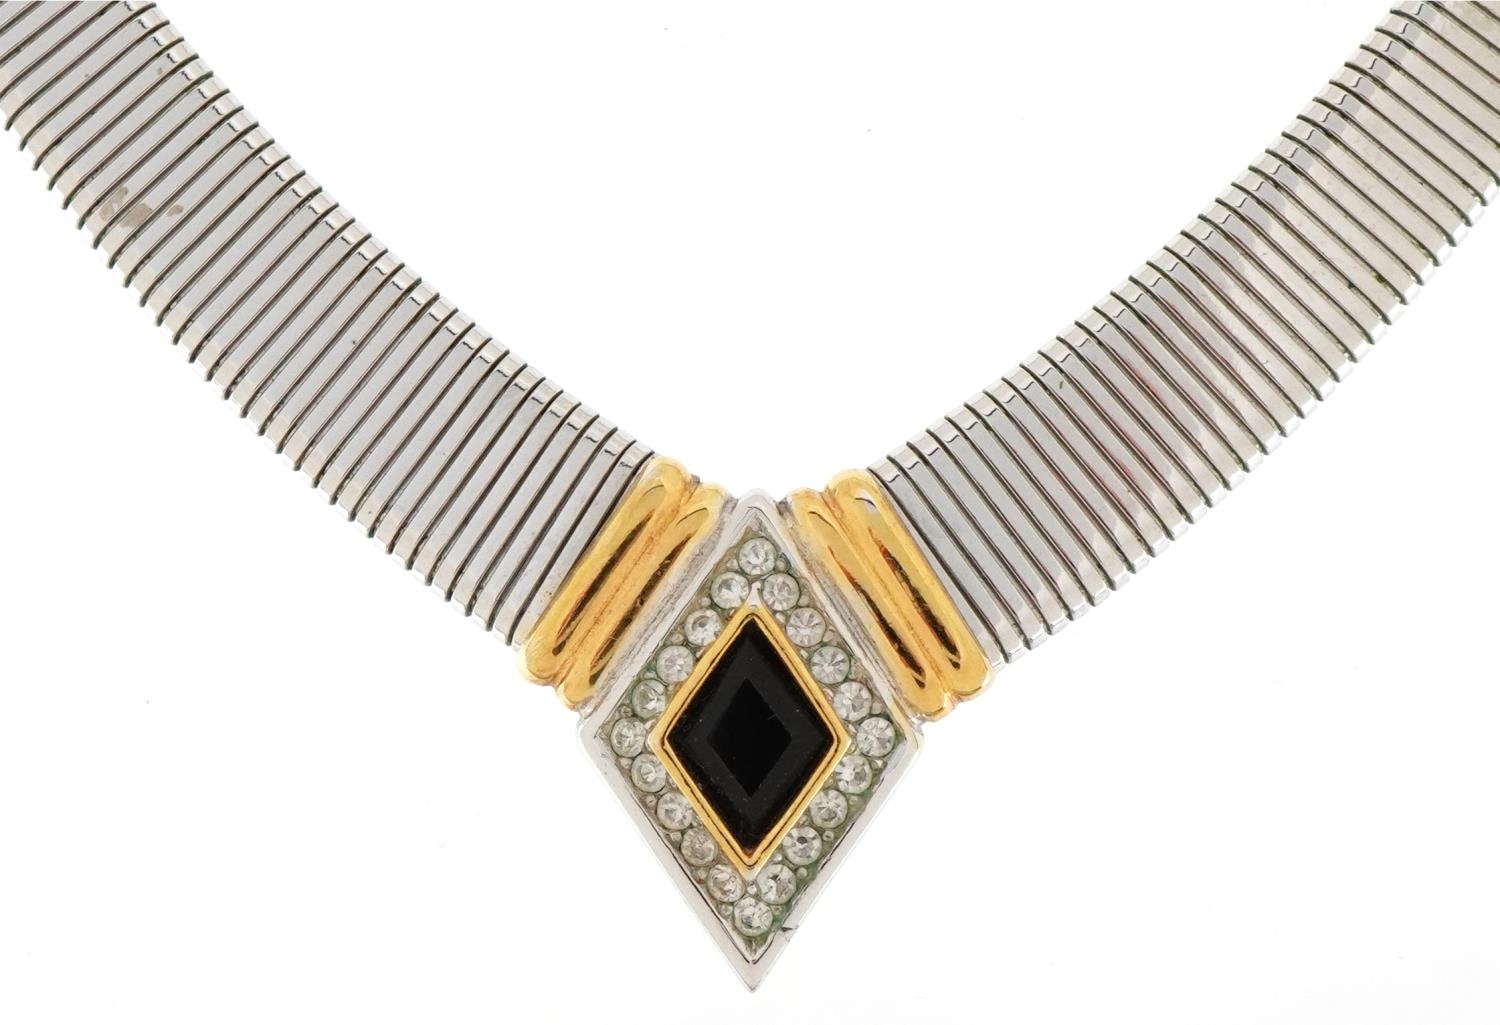 Christian Dior, vintage necklace, 40cm in length, 30.5g